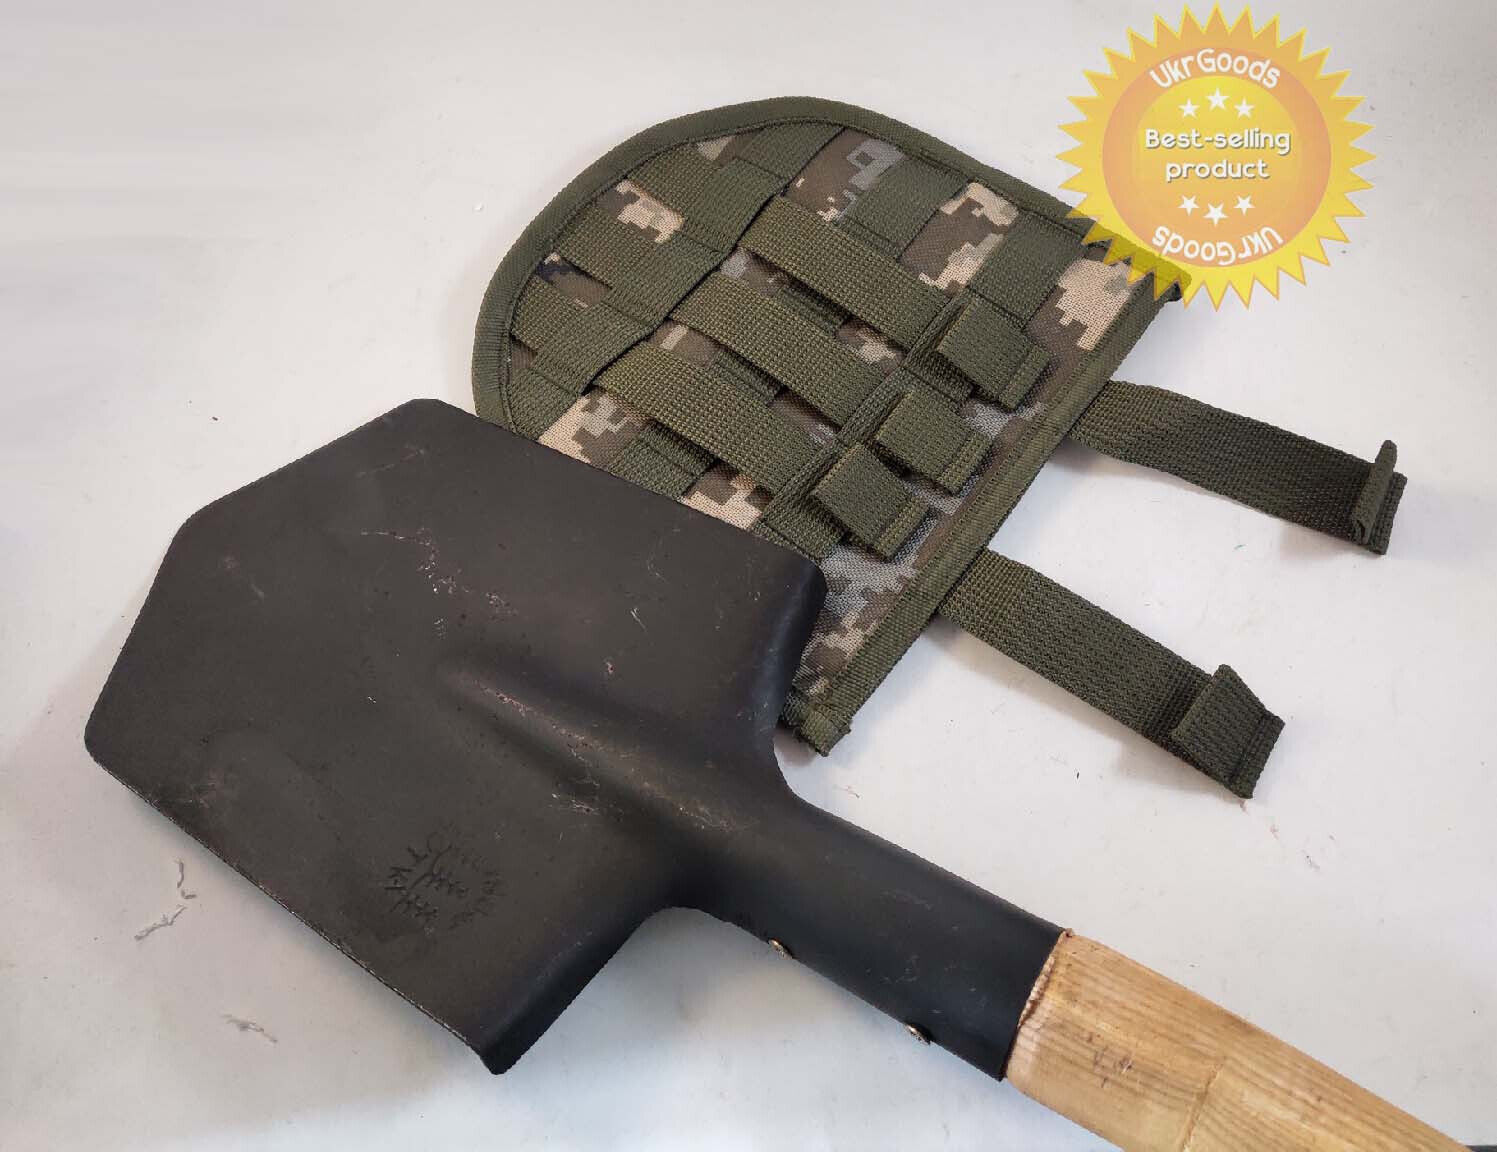 Infantry Army Sapper Shovel + Case Original Soveit USSR Military MPL-50 Small